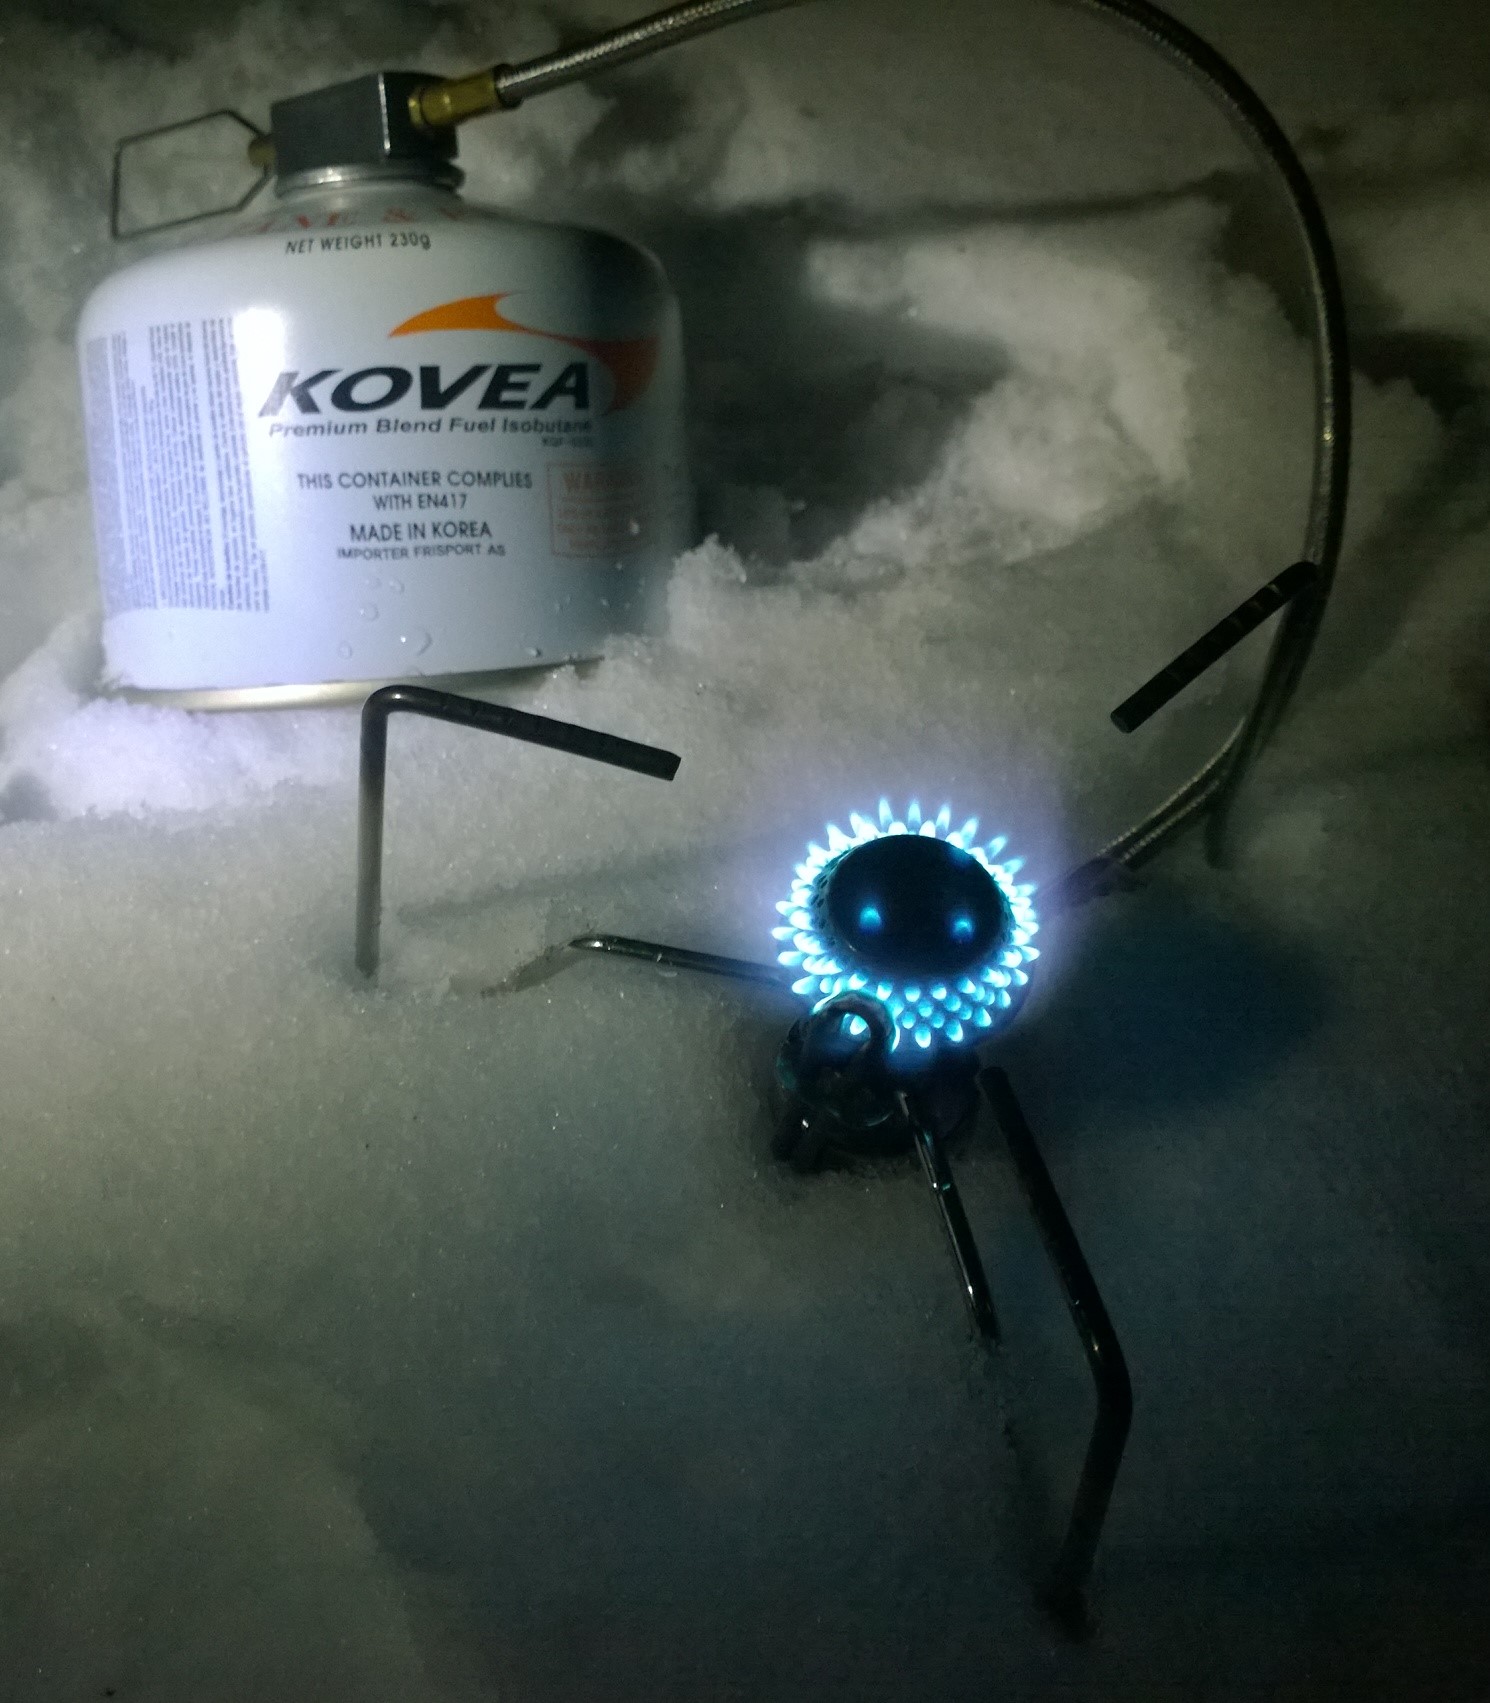 Adventures In Stoving: The Kovea LPG (Propane) Adapter